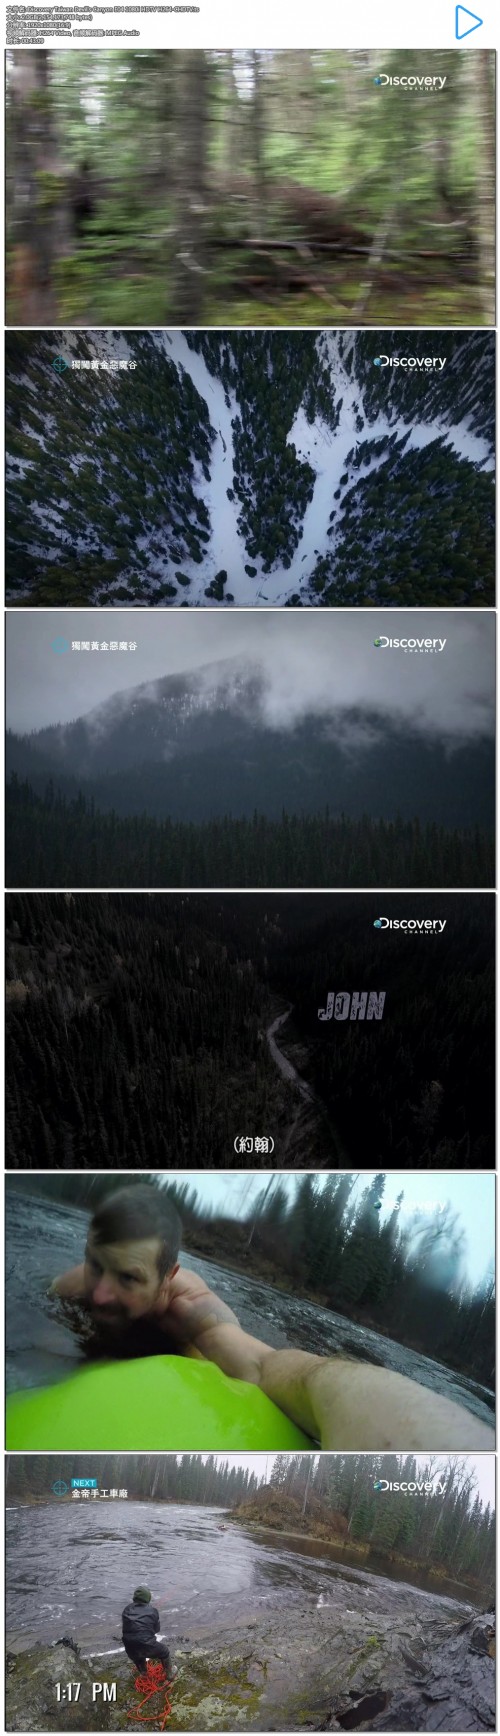 Discovery Taiwan Devil's Canyon E04 1080i HDTV H264 CHDTV.ts